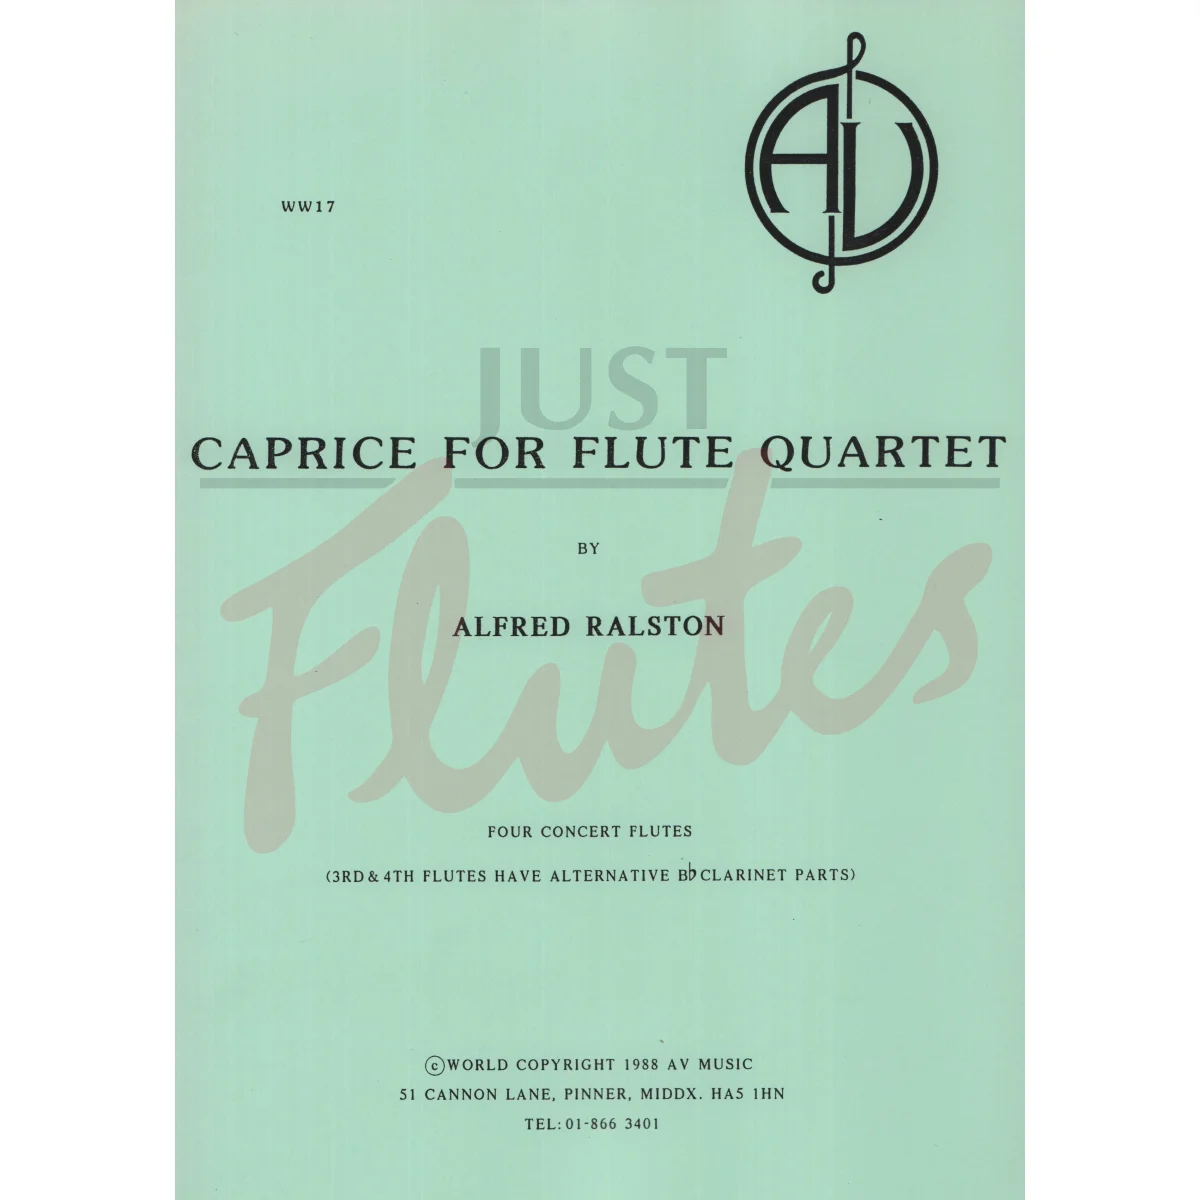 Caprice for Flute Quartet